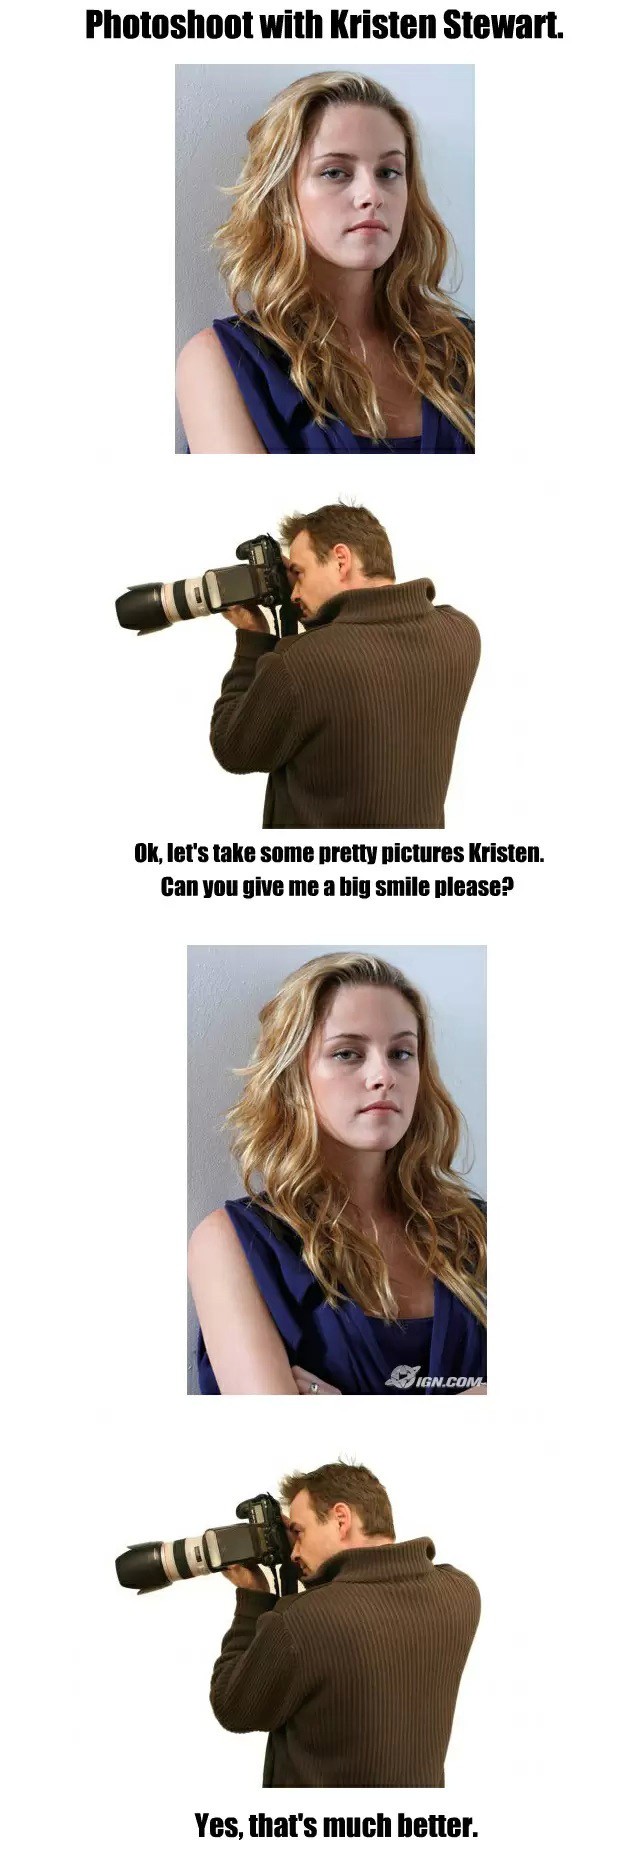 Kristen Stewart's Funny Photoshoot!